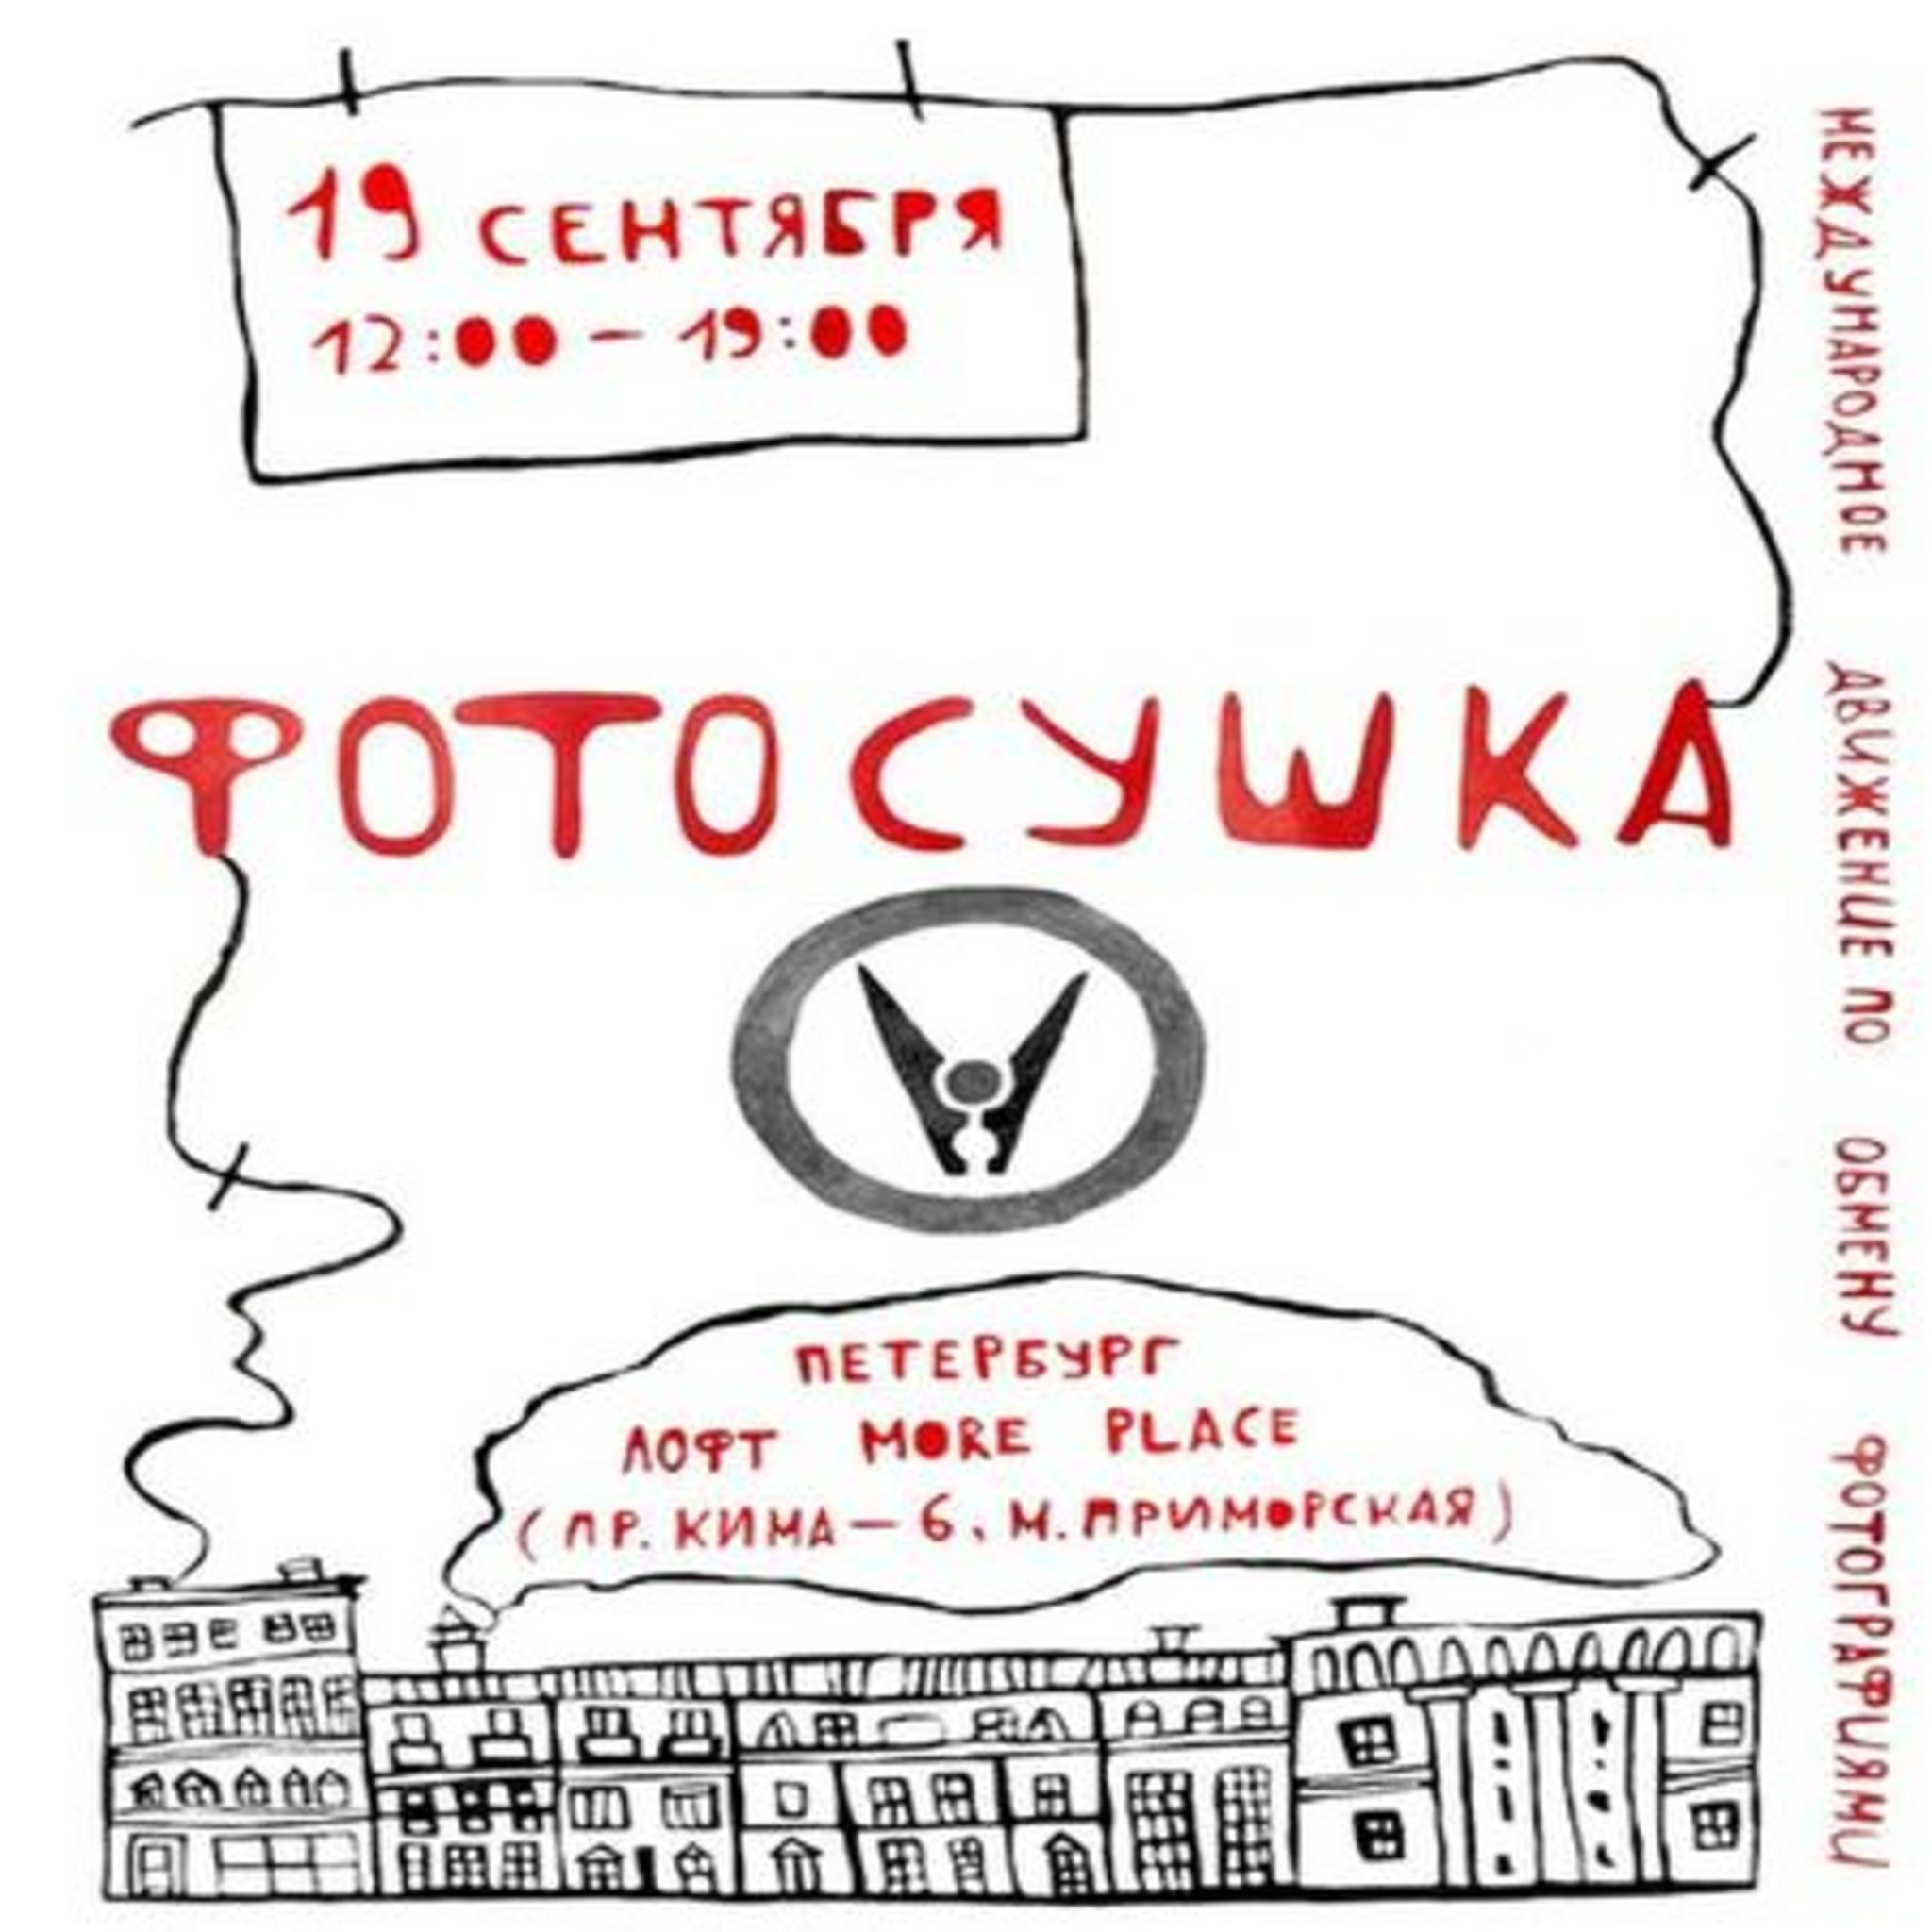 Festival Fotosushka